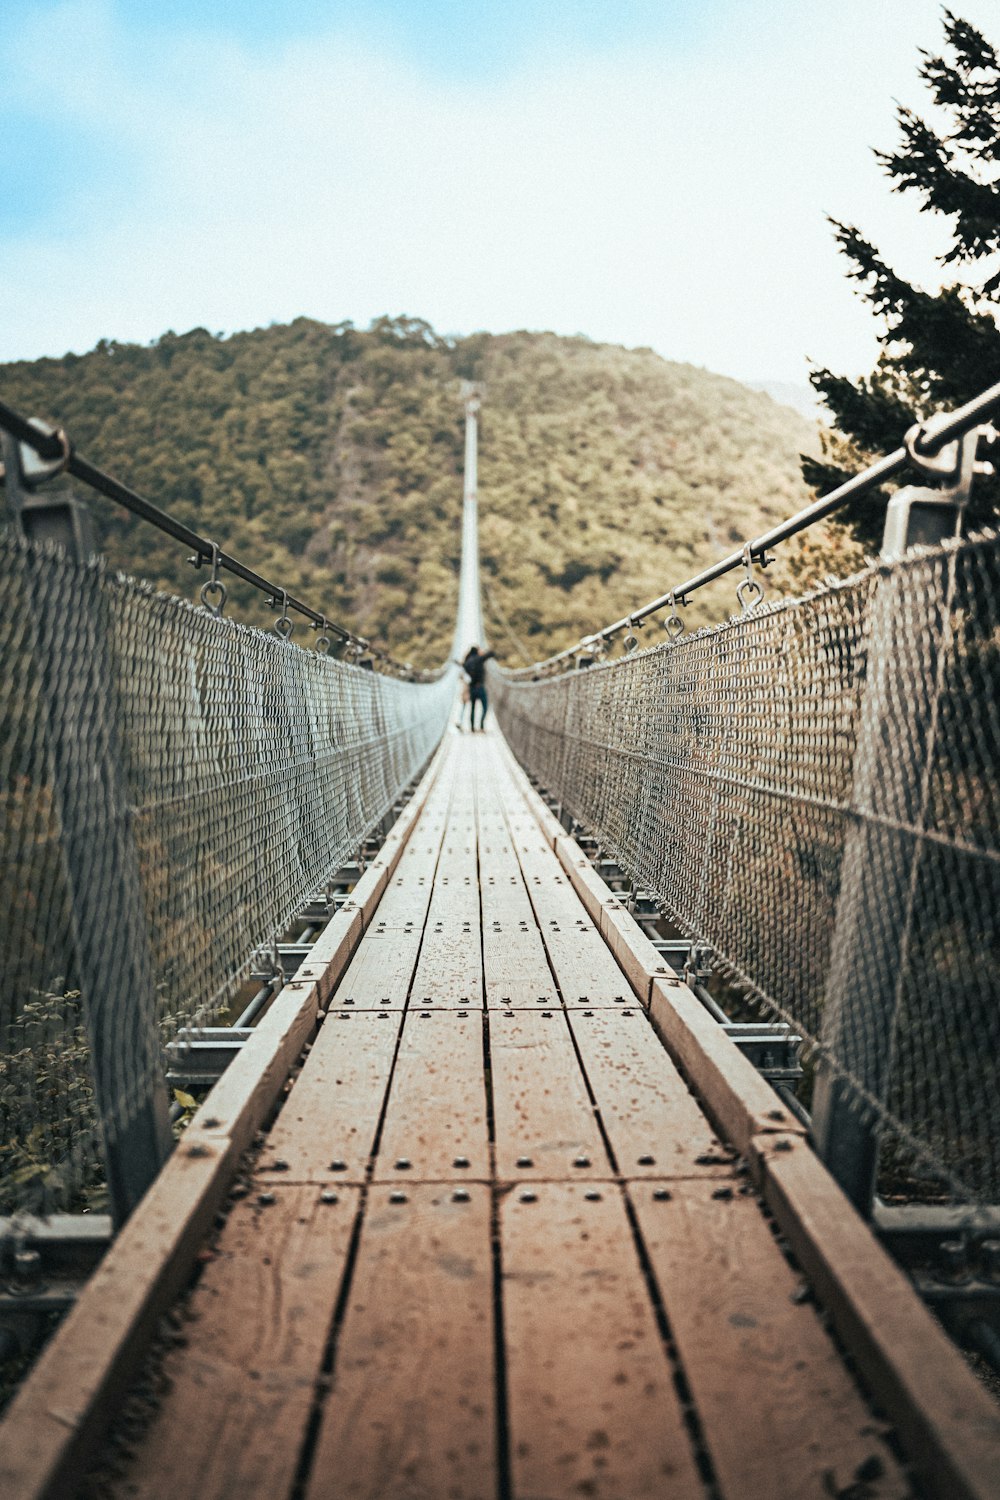 a person walking across a suspension bridge over a river